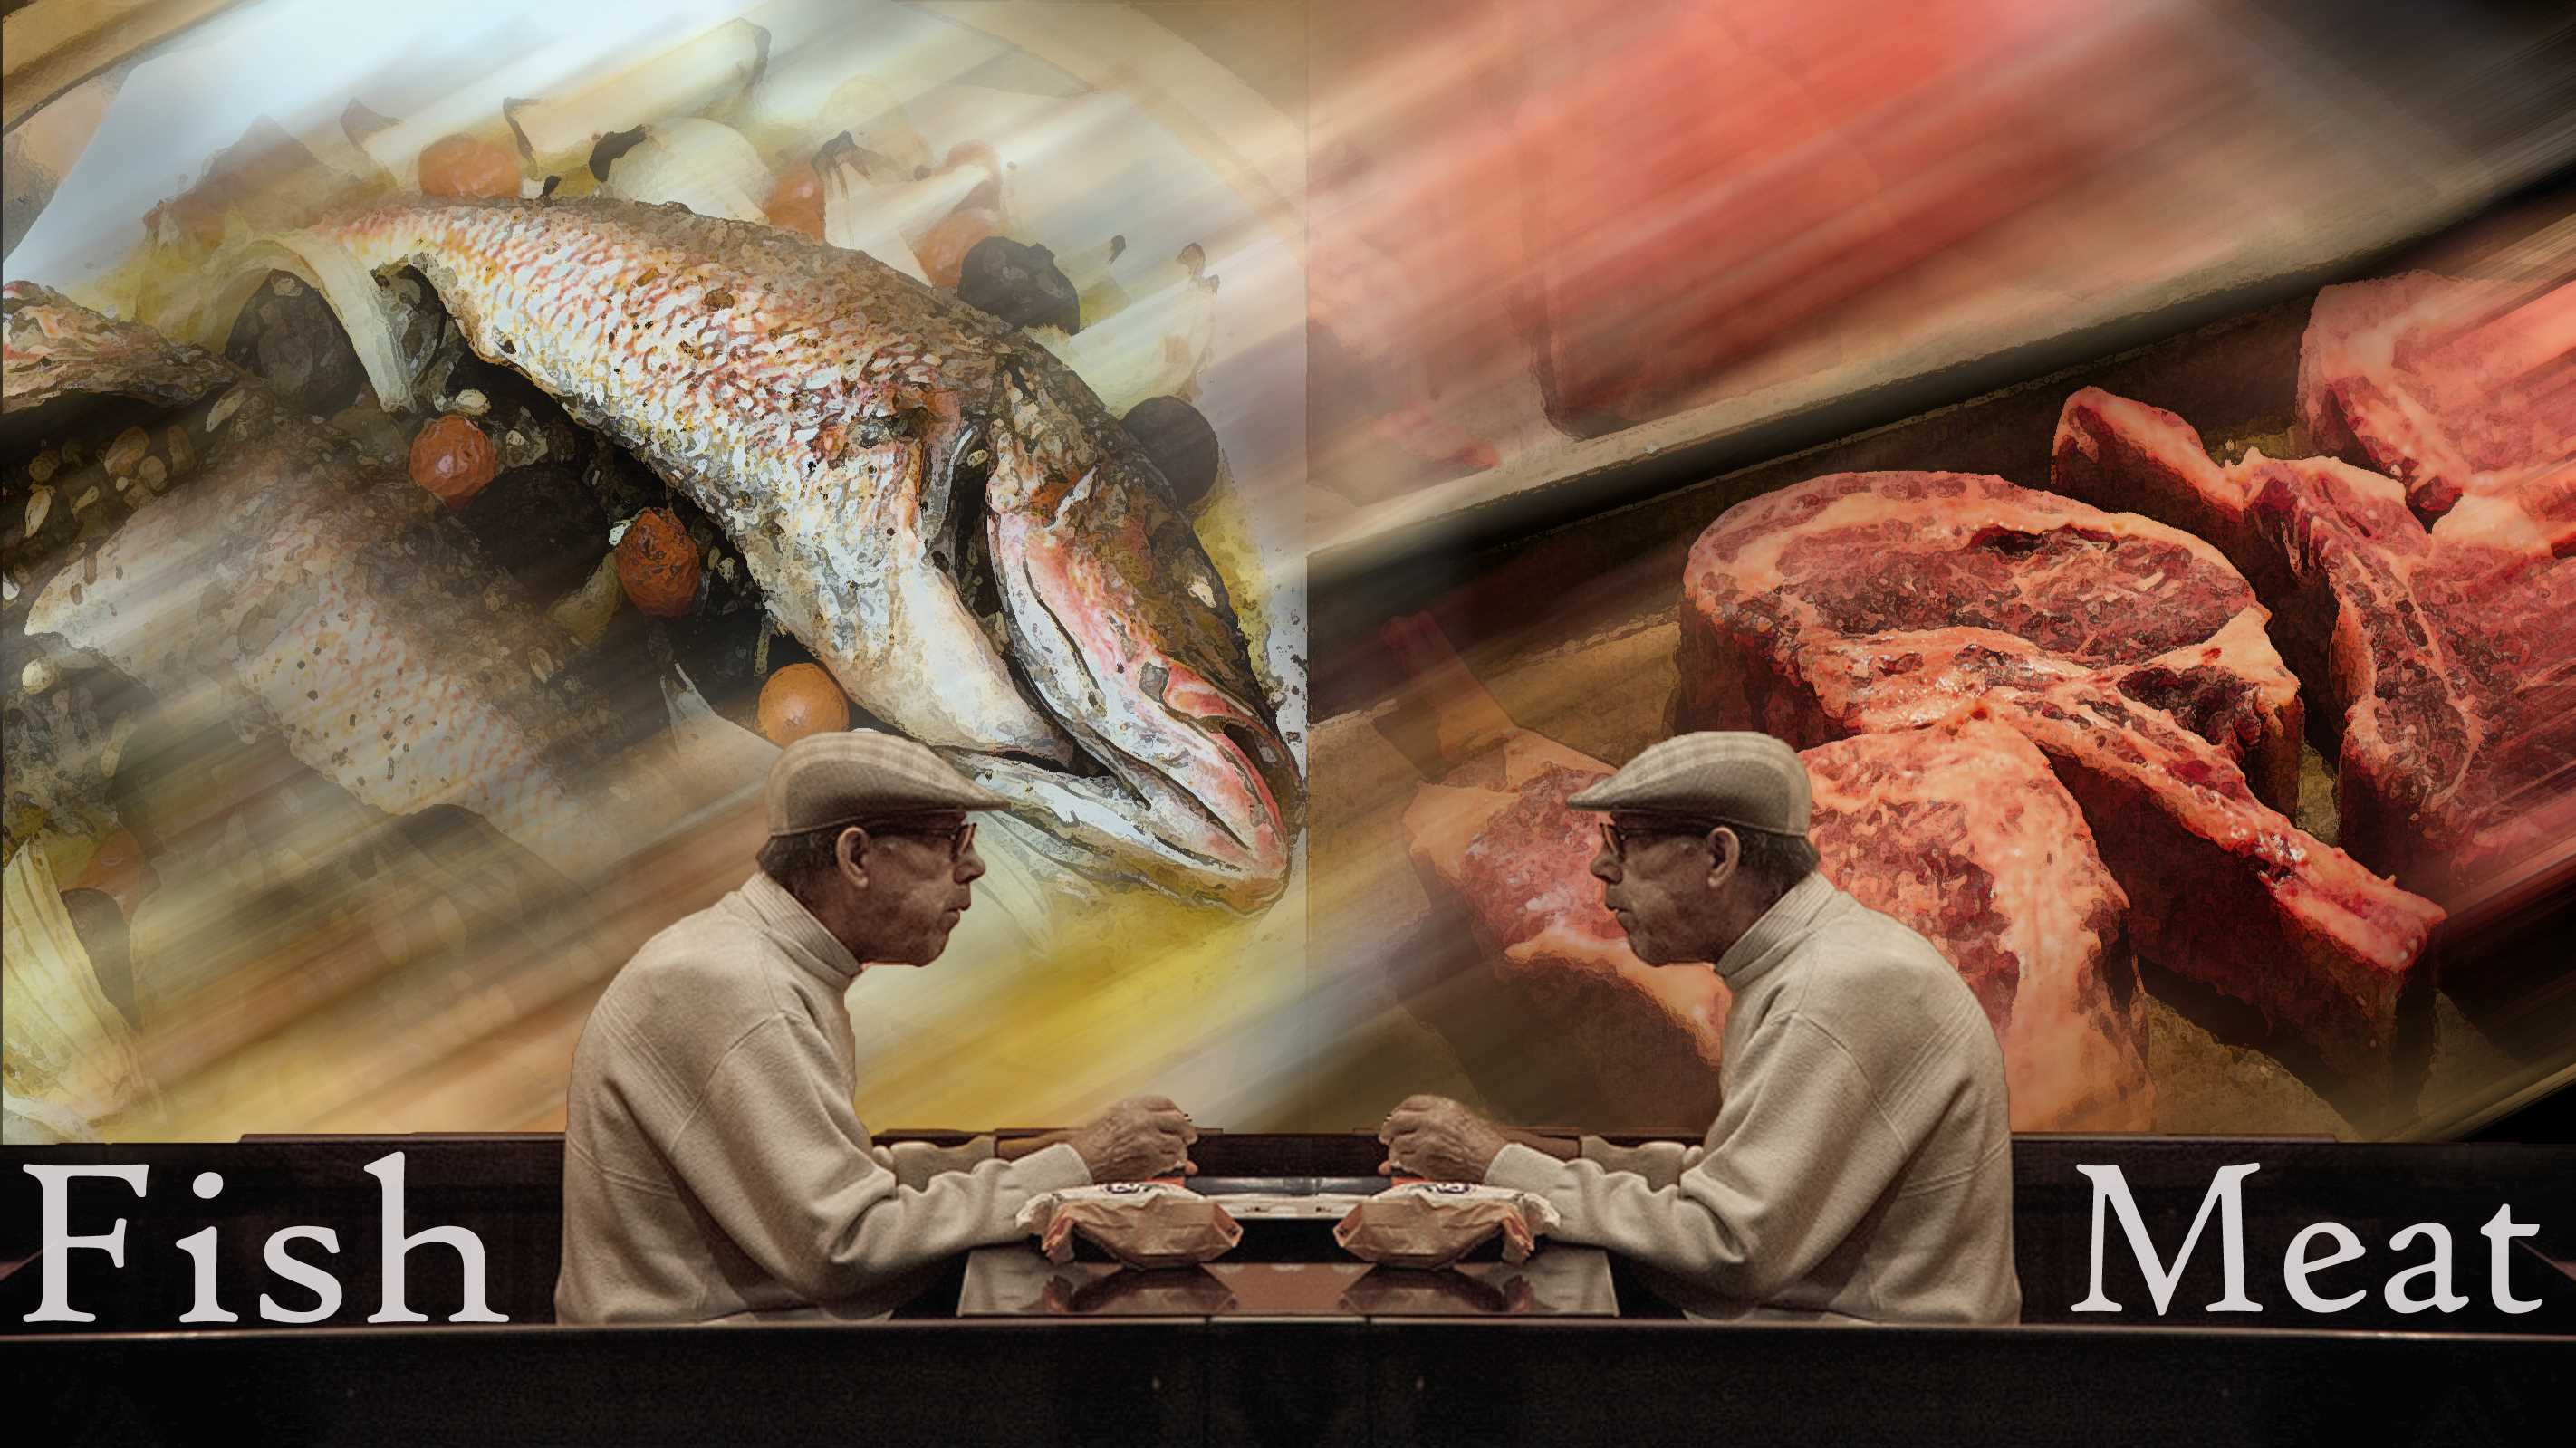 Fish vs meat: what do you prefer? - netivist